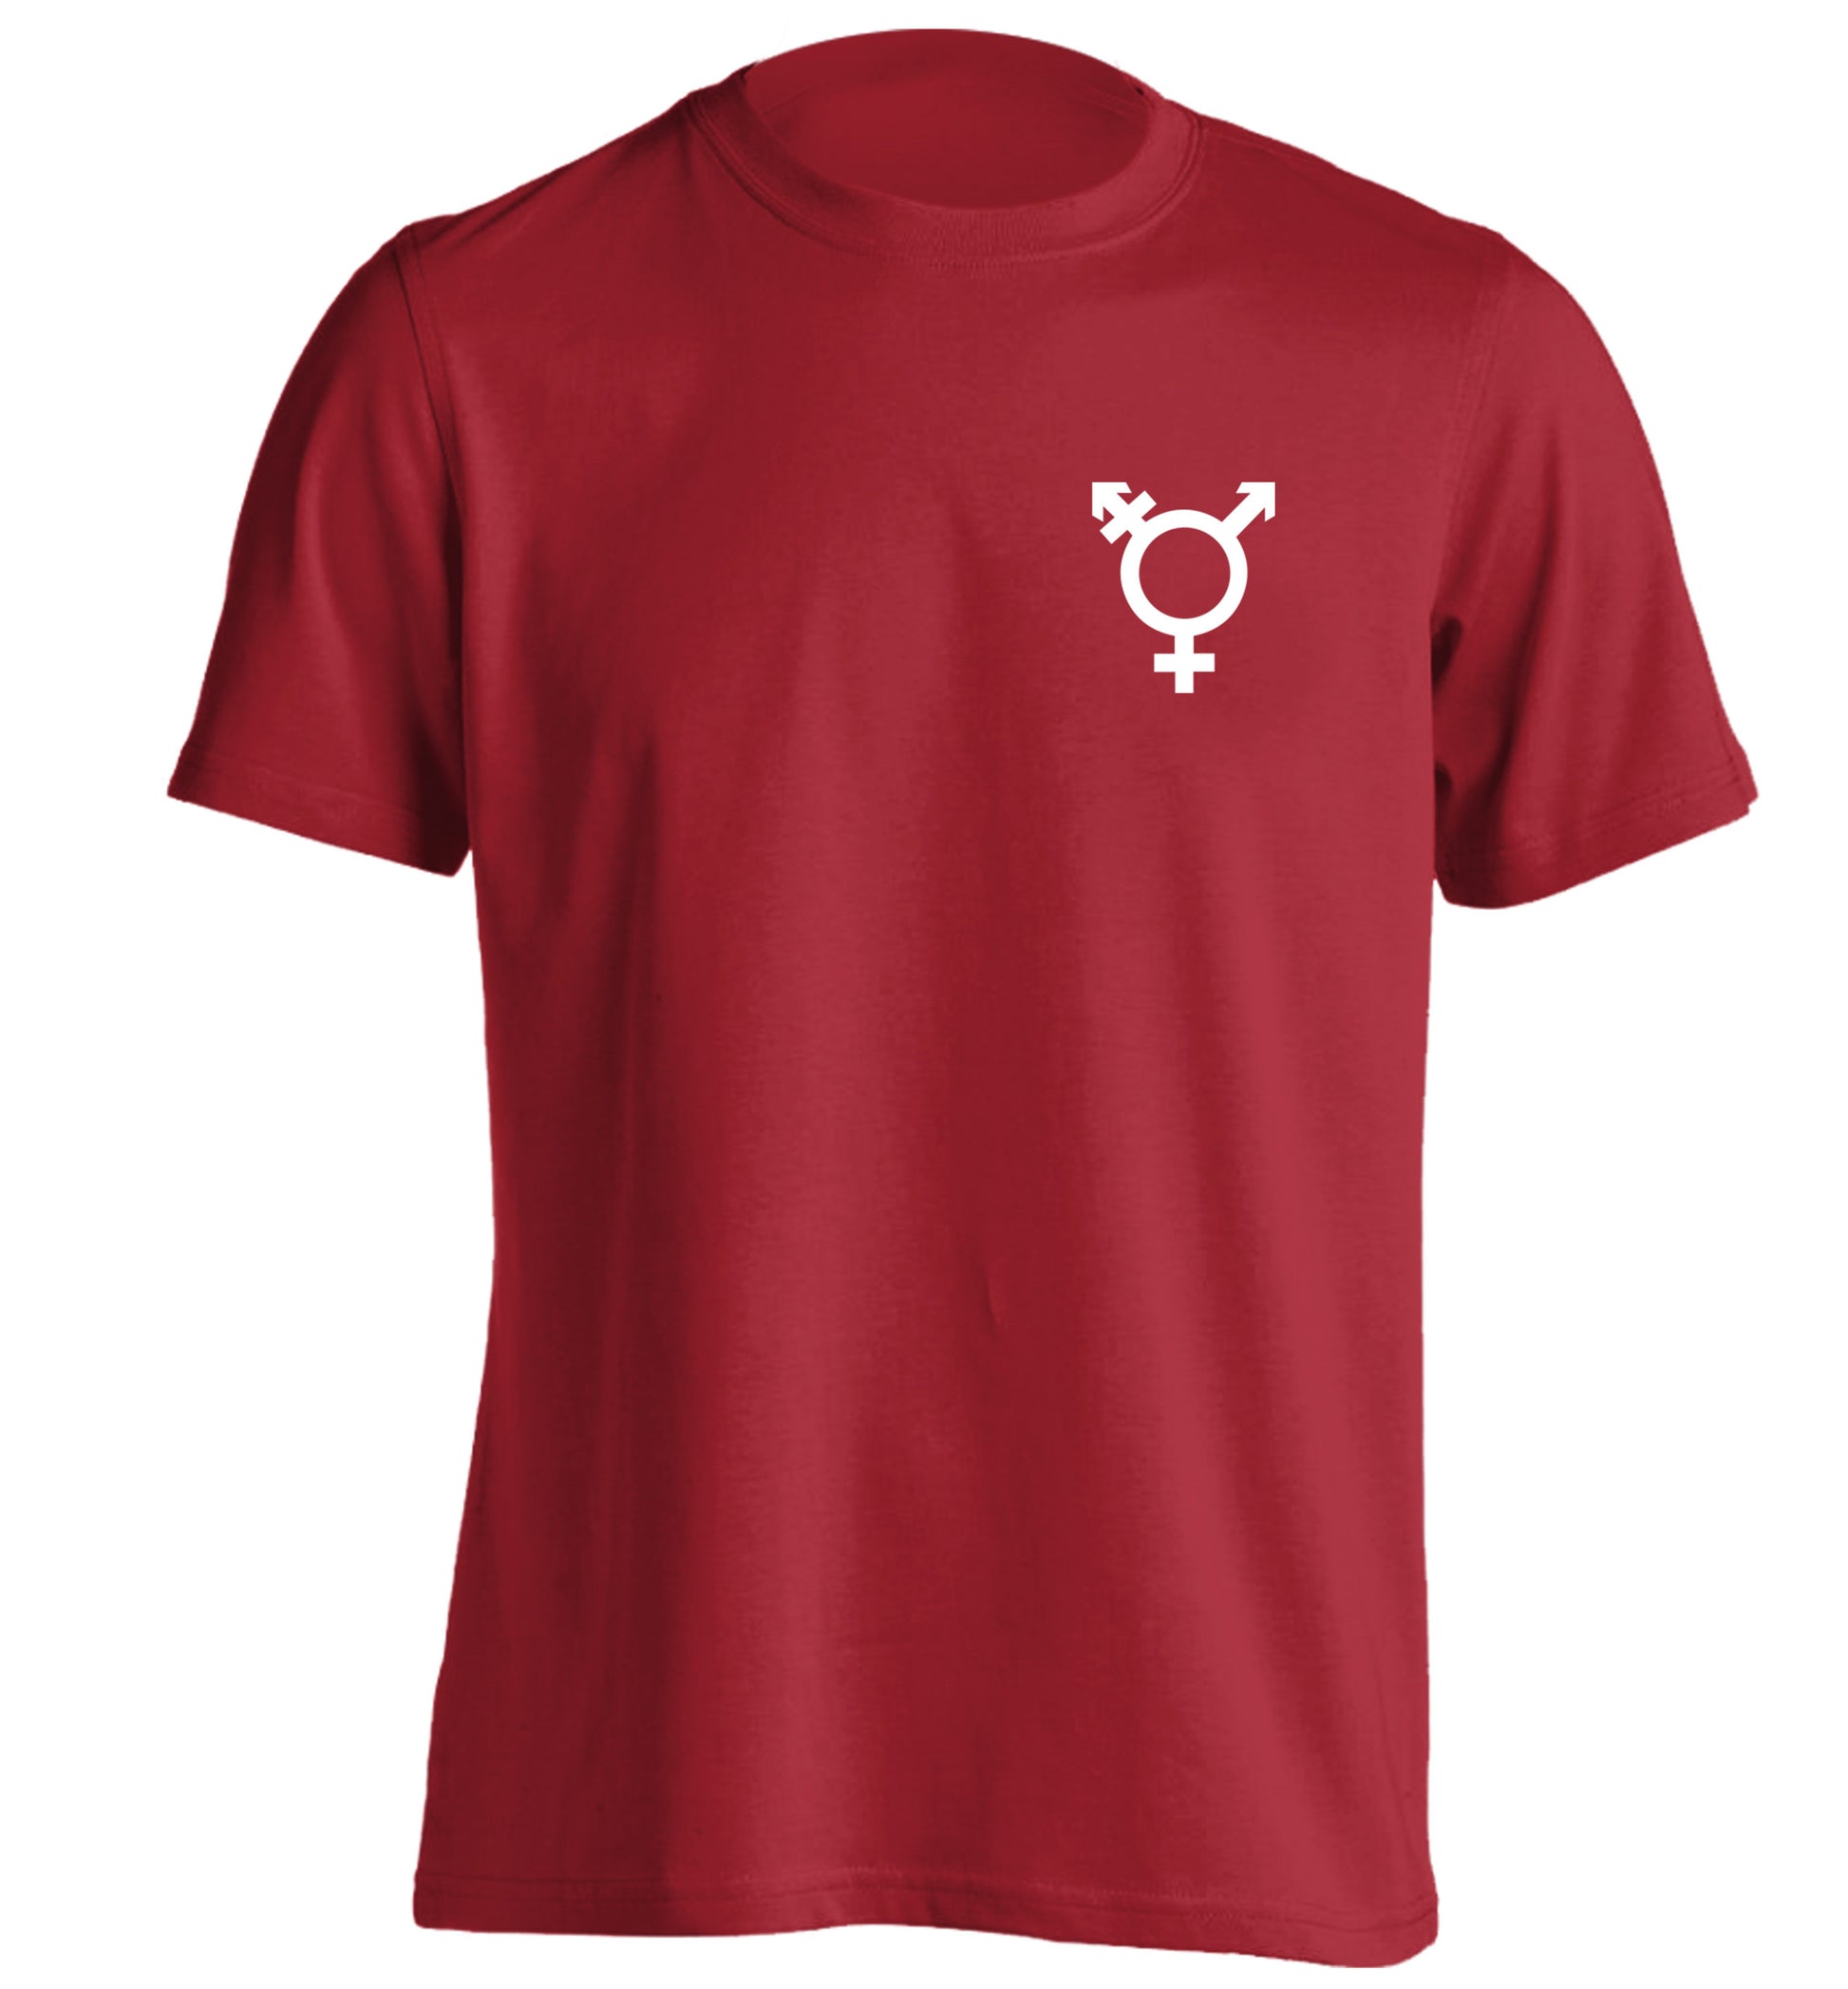 Trans gender symbol pocket adults unisex red Tshirt 2XL